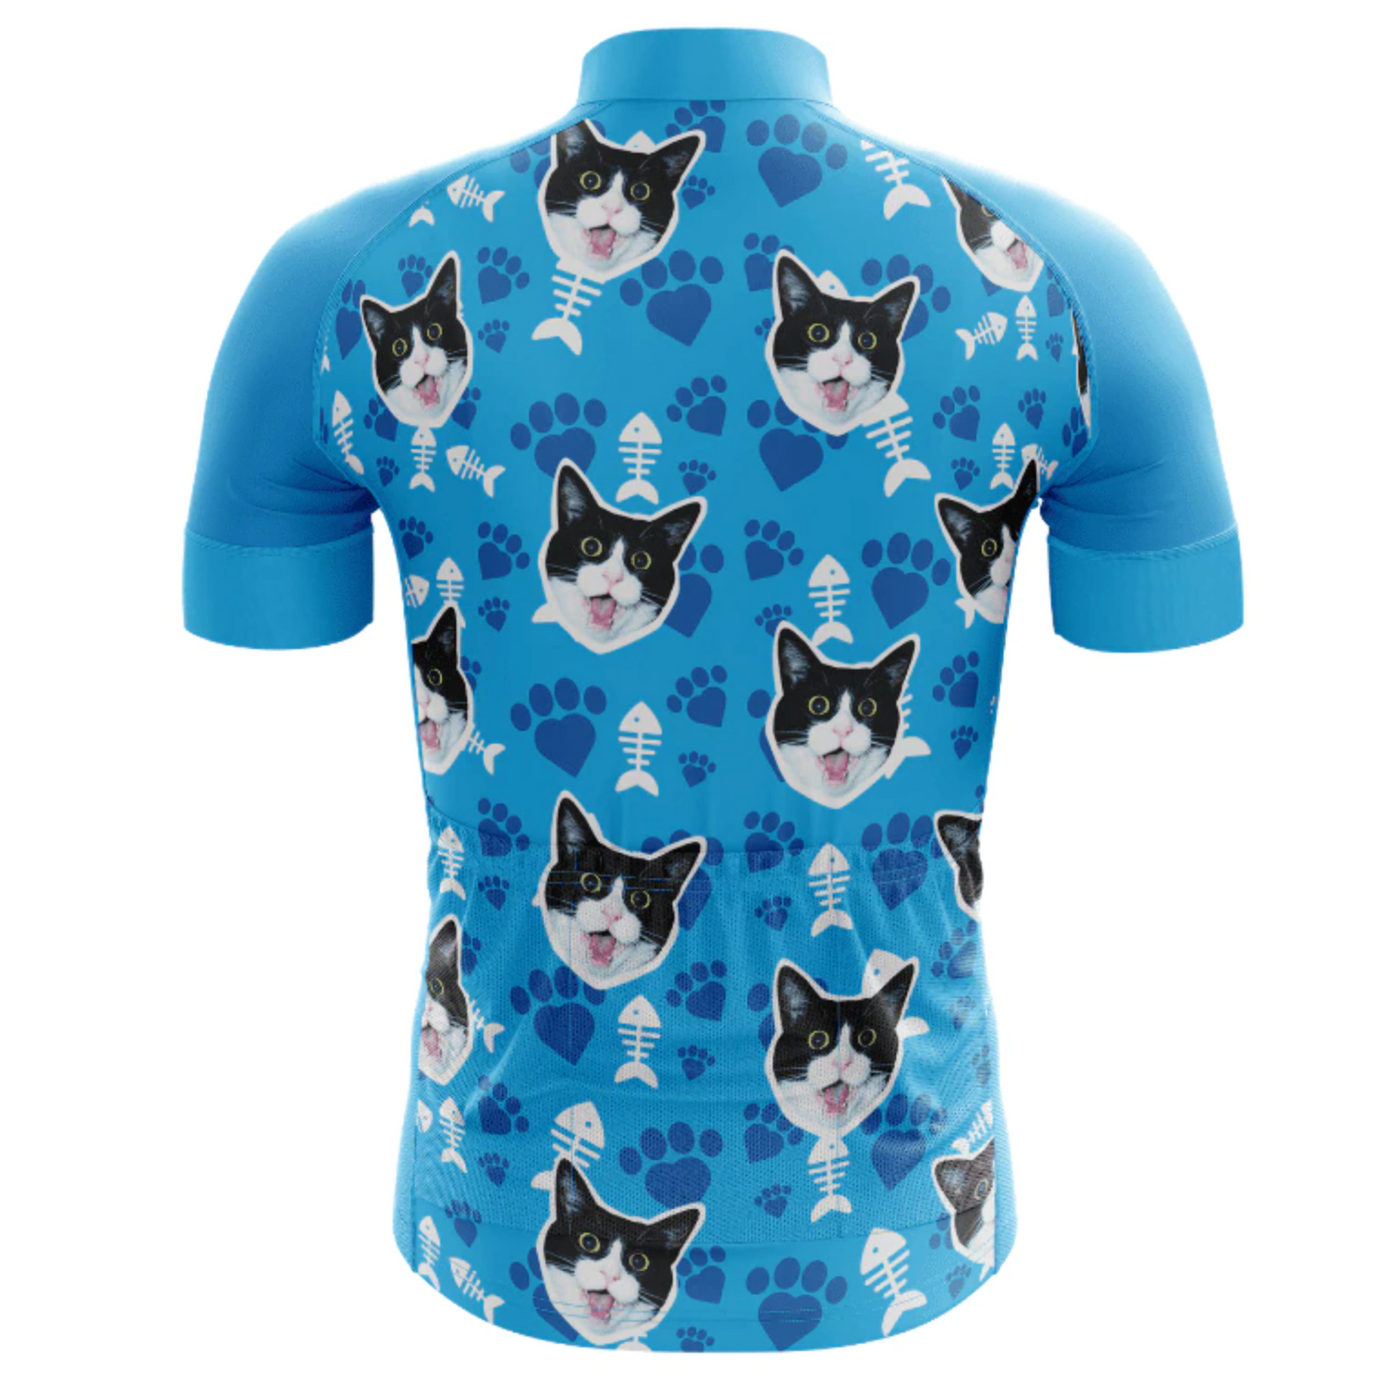 Cat Short Sleeve Jersey